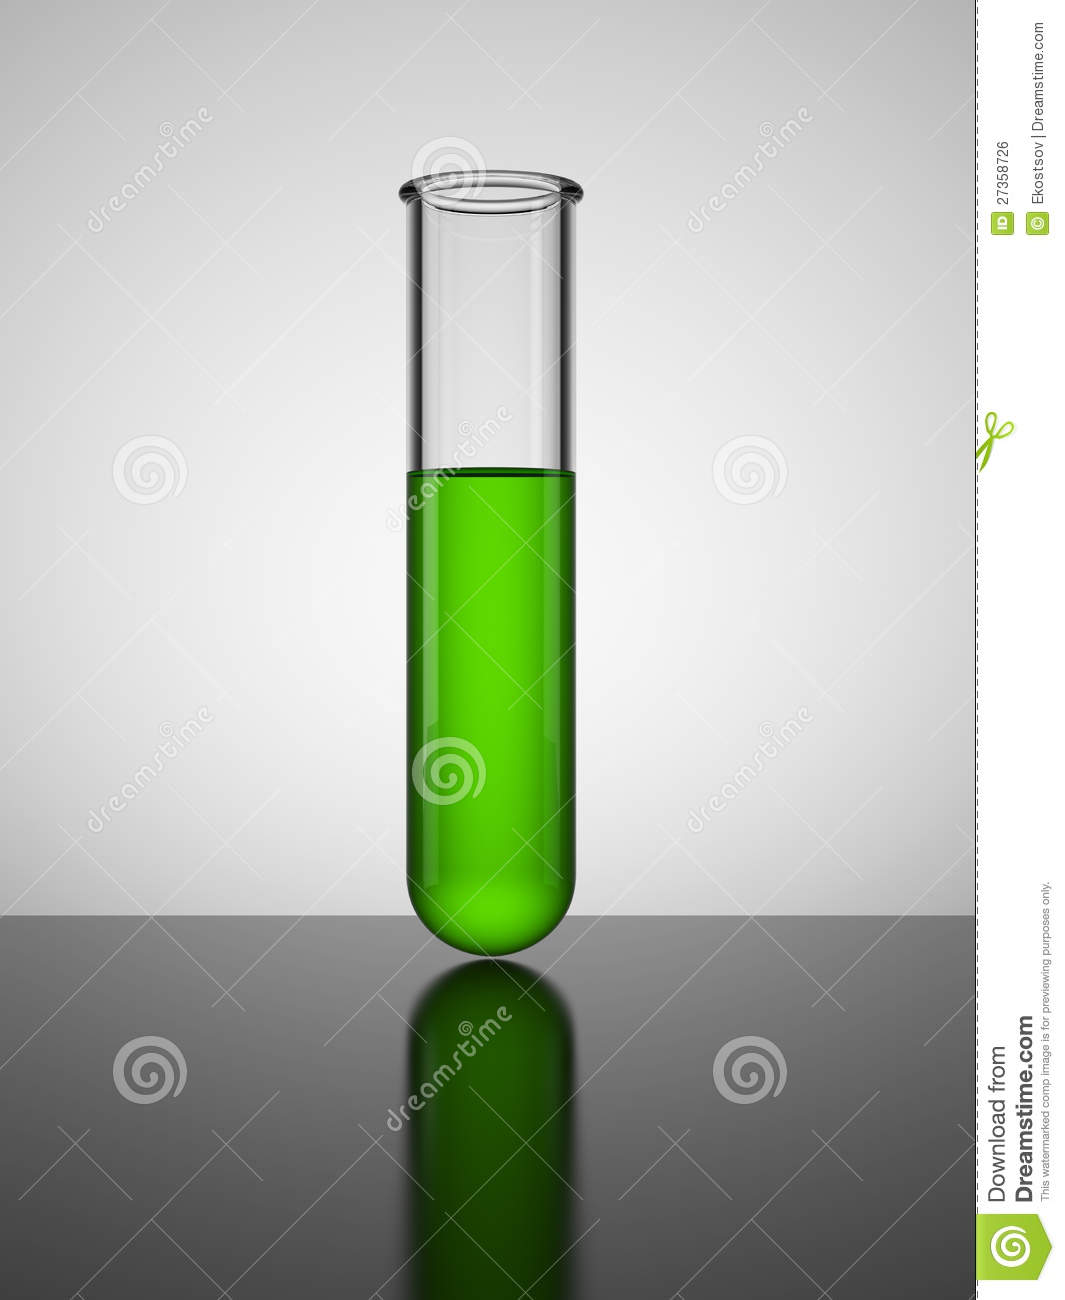 Beaker With Green Liquid  Test Tube  Royalty Free Stock Image   Image    